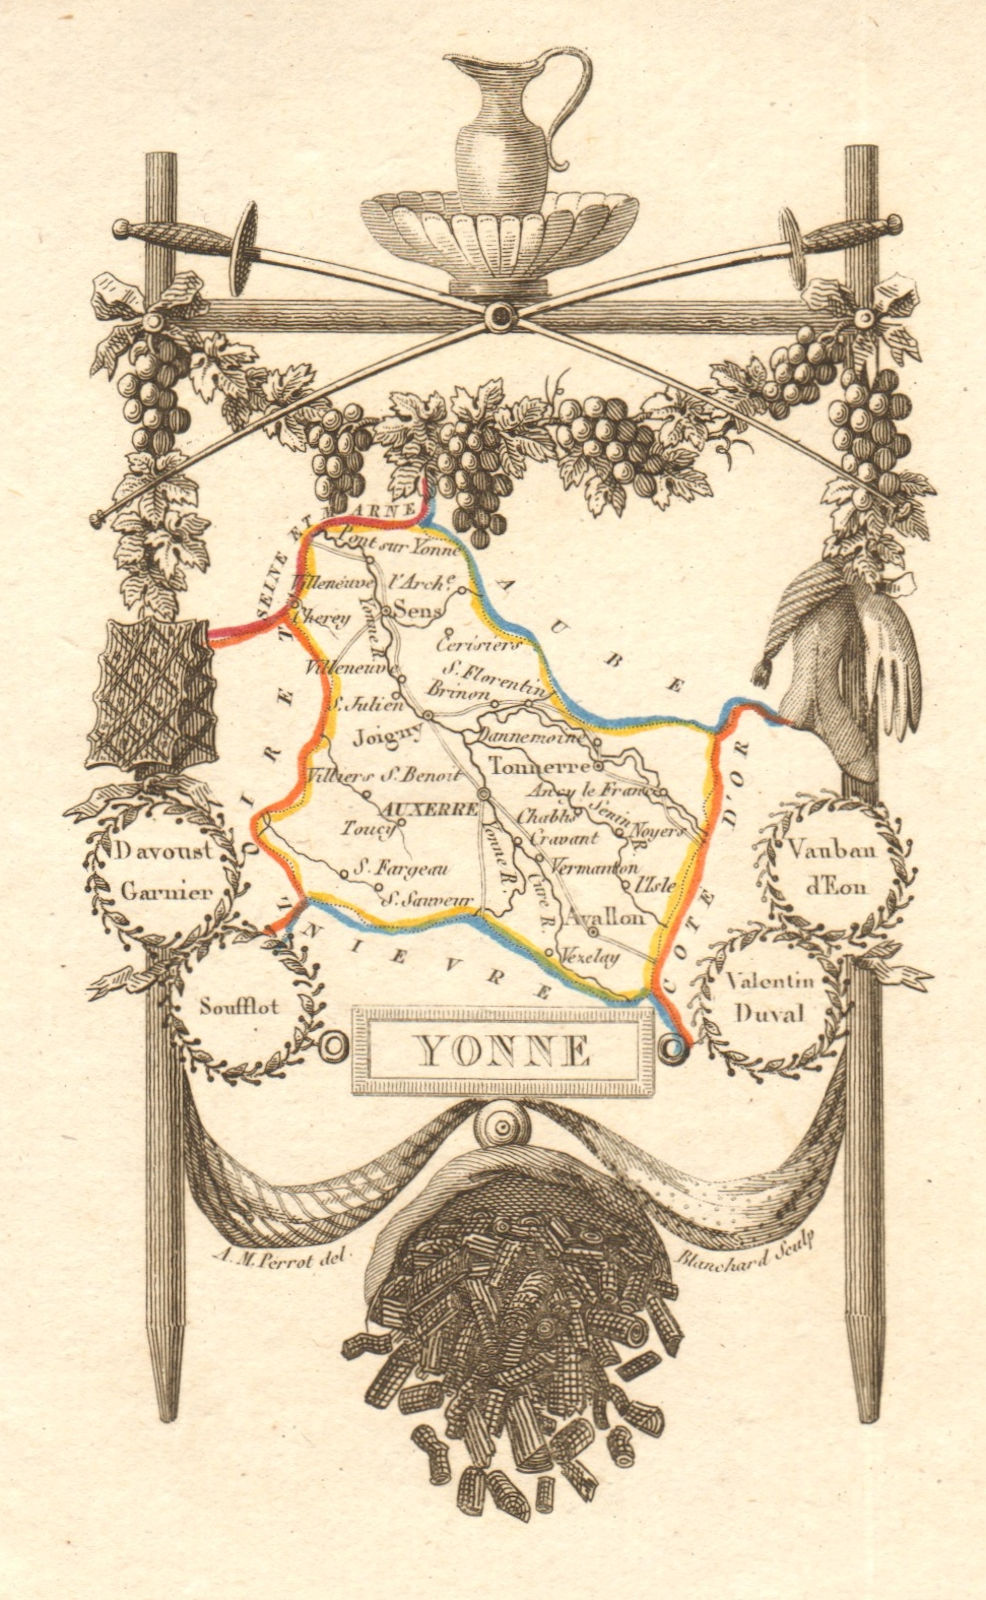 Associate Product YONNE département. Scarce antique map/carte by A.M. PERROT 1823 old